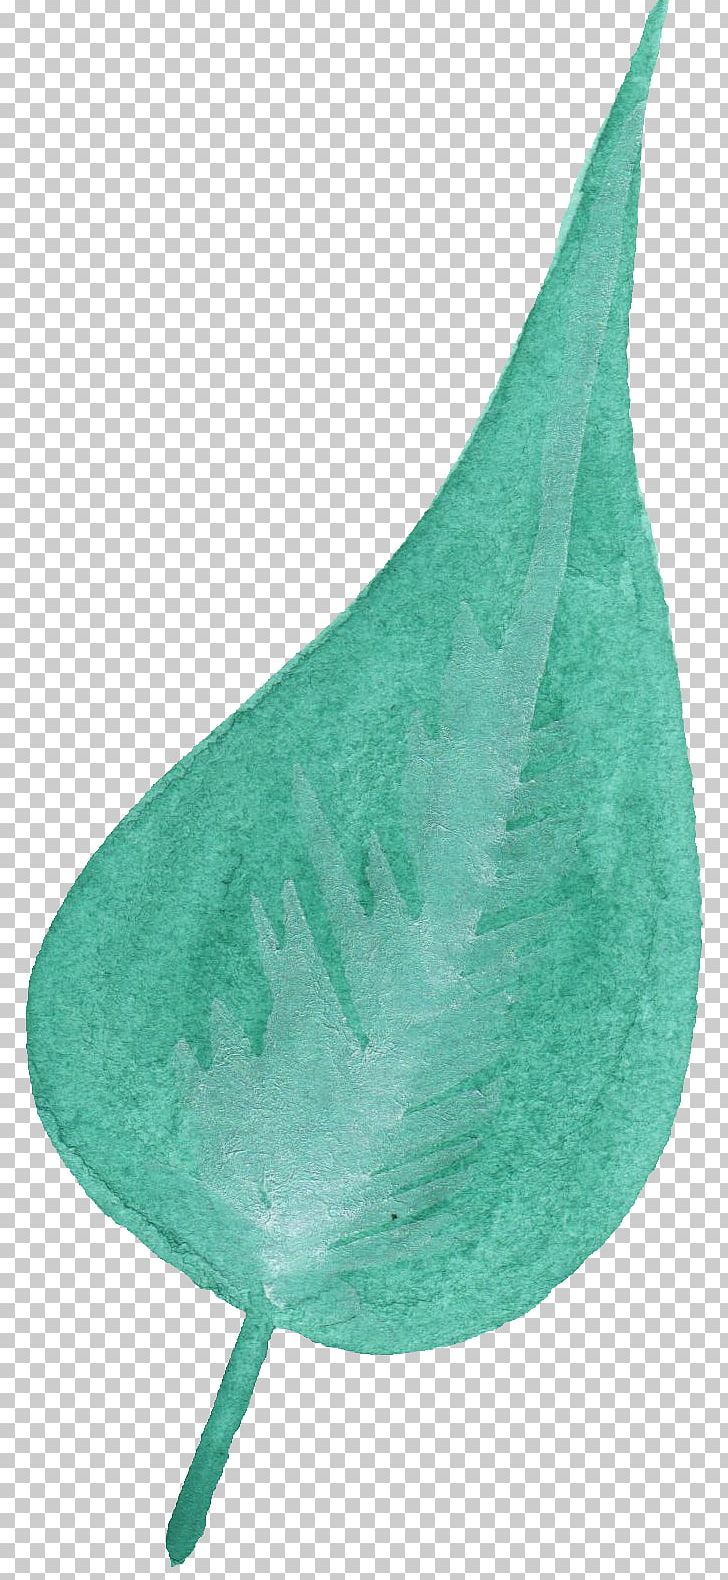 Leaf Teal Turquoise PNG, Clipart, Aqua, Com, Download, Leaf, Teal Free PNG Download